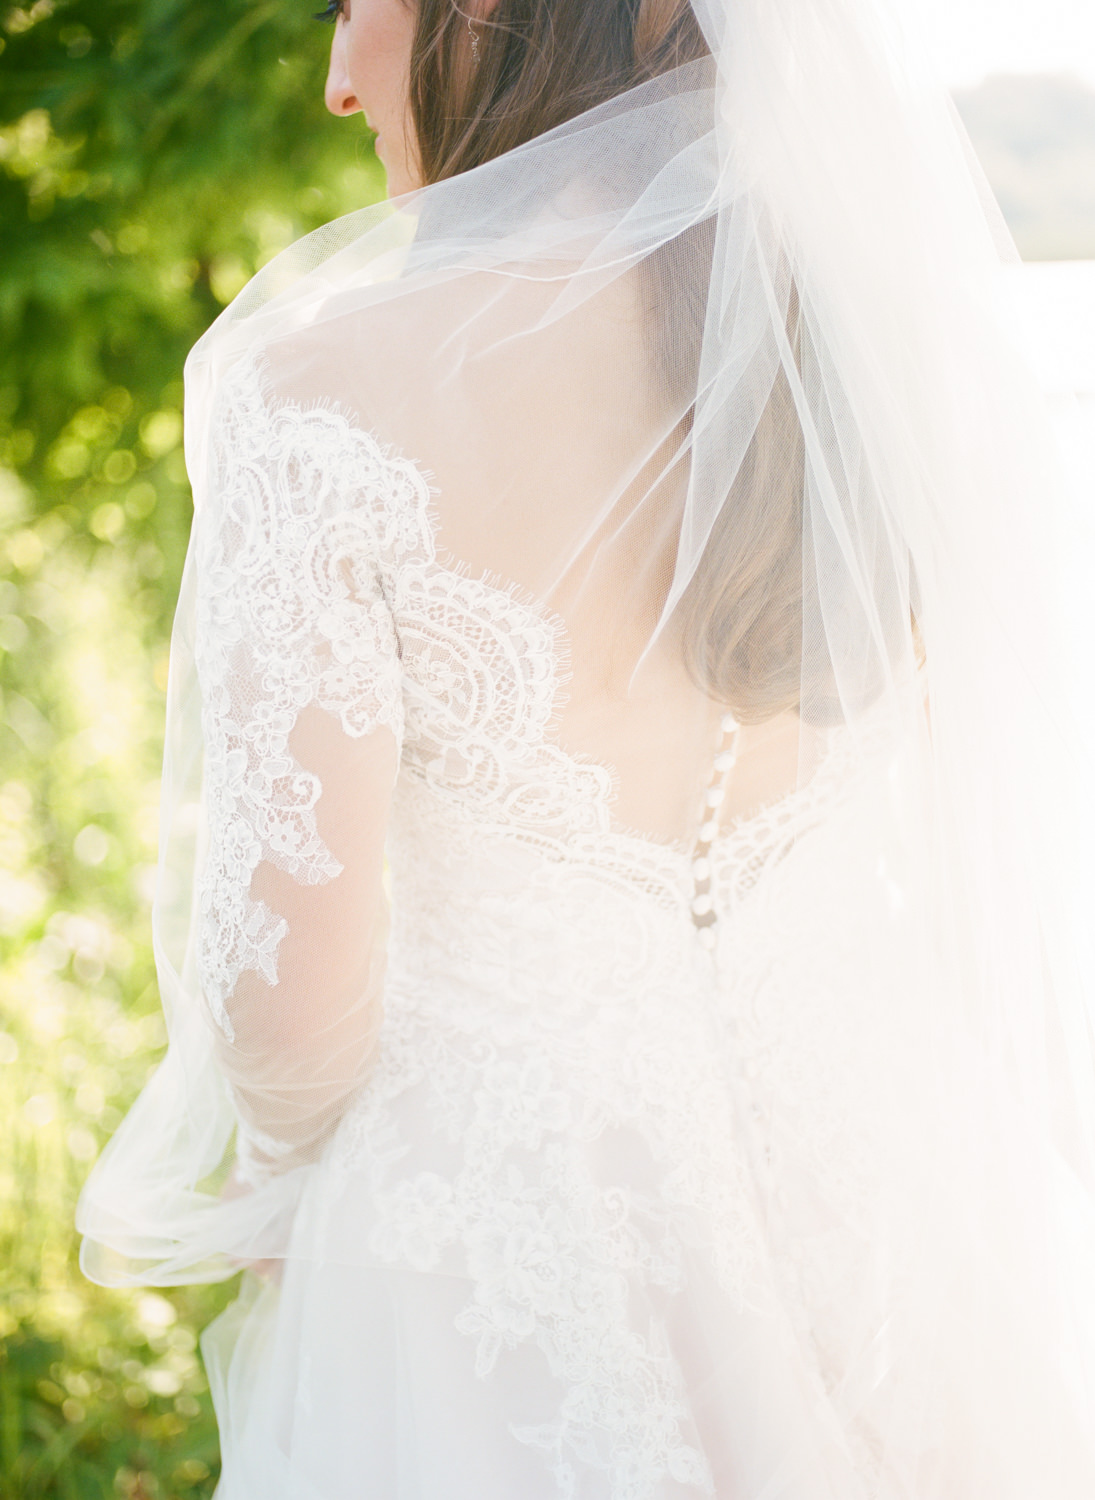 Lace sleeve wedding dress back; St. Louis fine art film wedding photographer Erica Robnett Photography